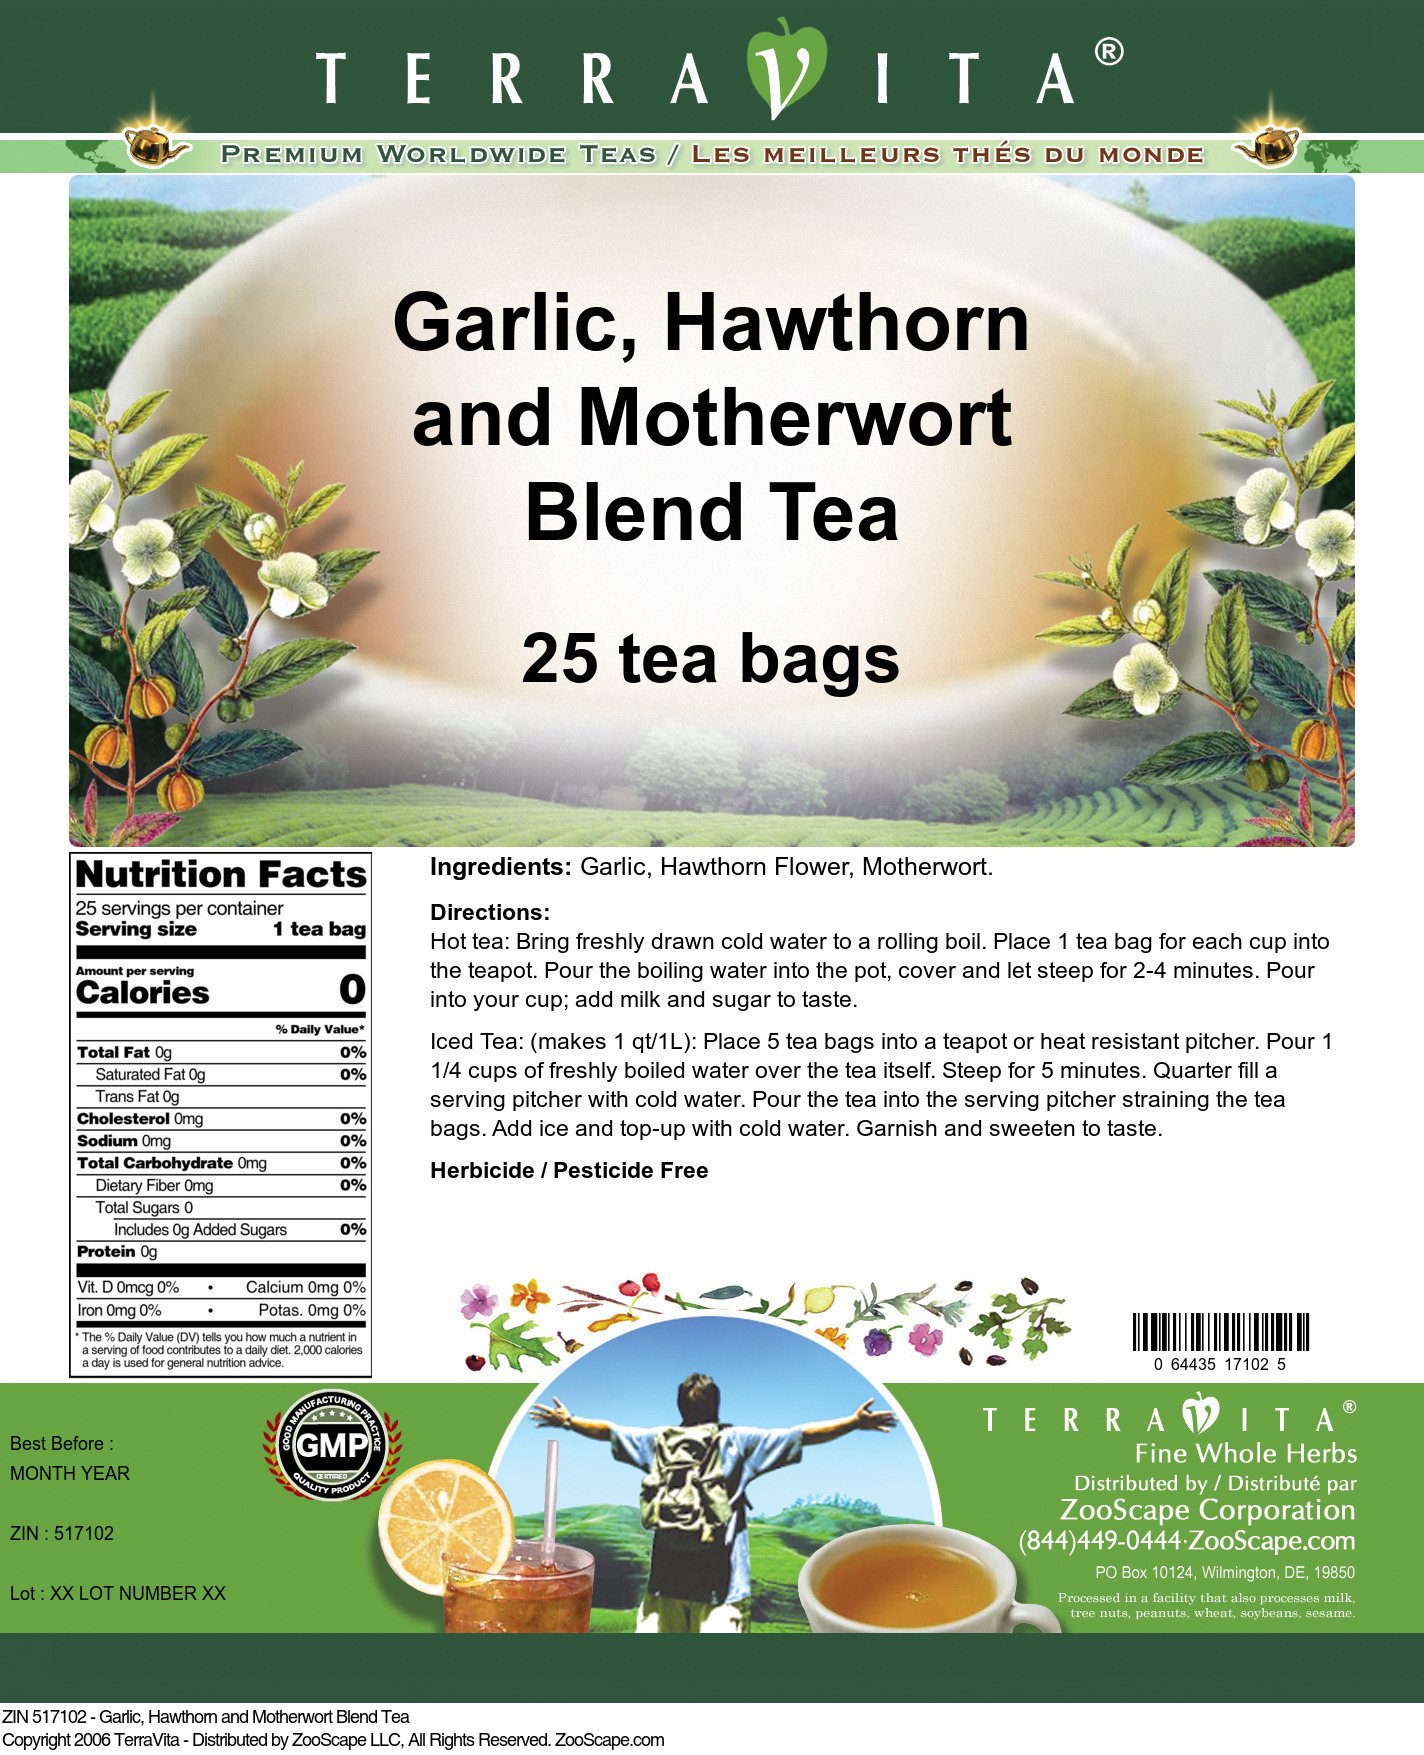 Garlic, Hawthorn and Motherwort Blend Tea - Label